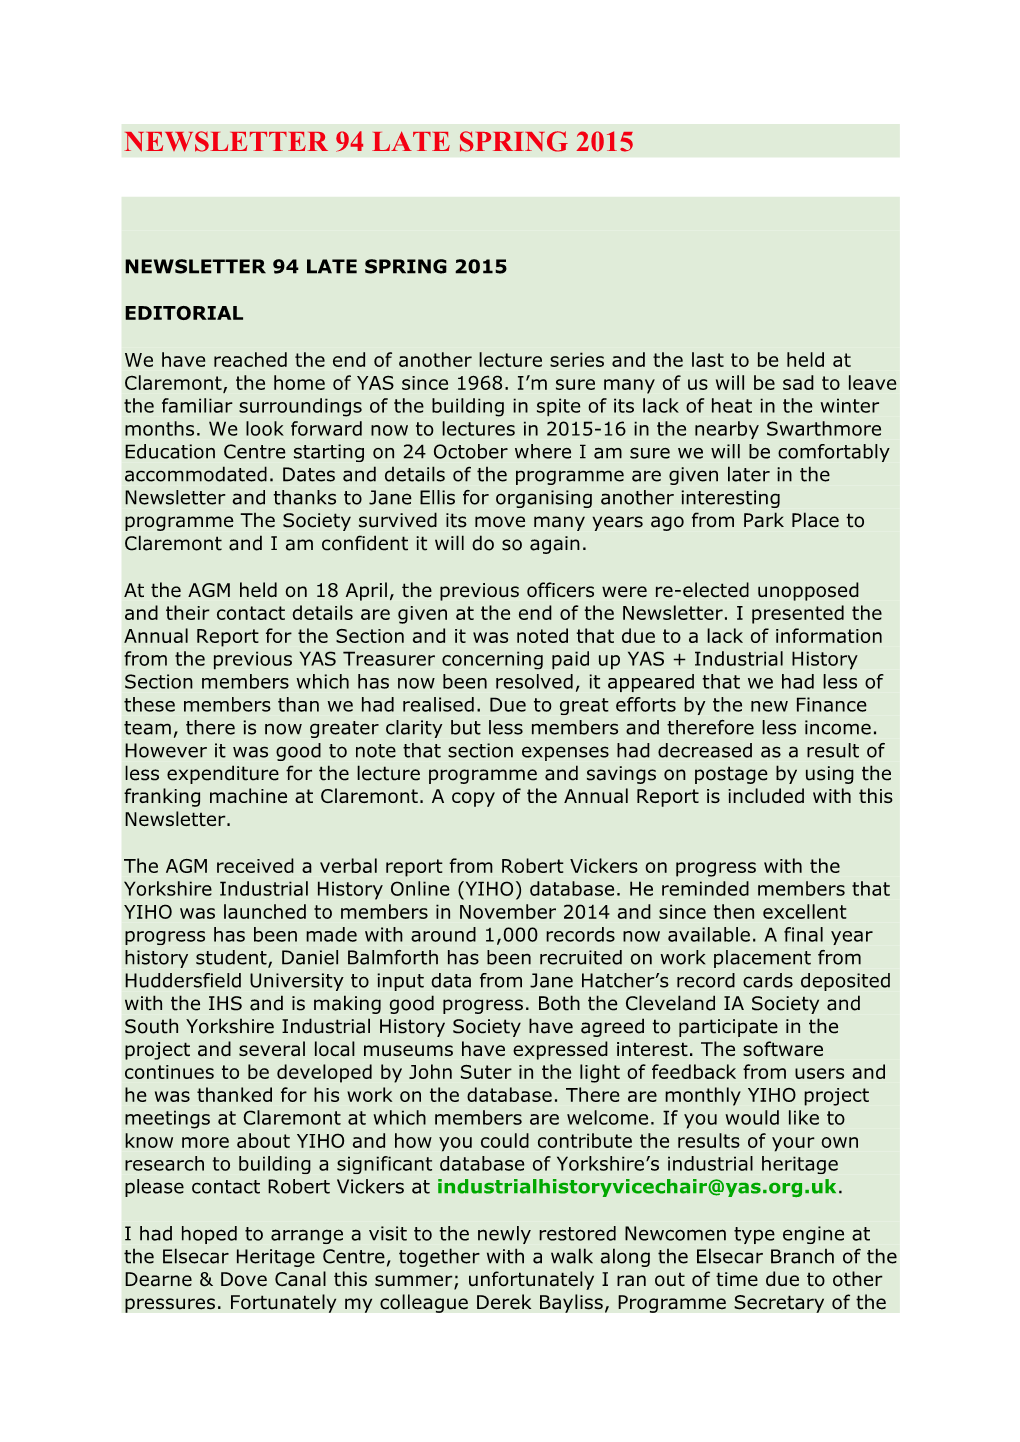 Newsletter 94 Late Spring 2015